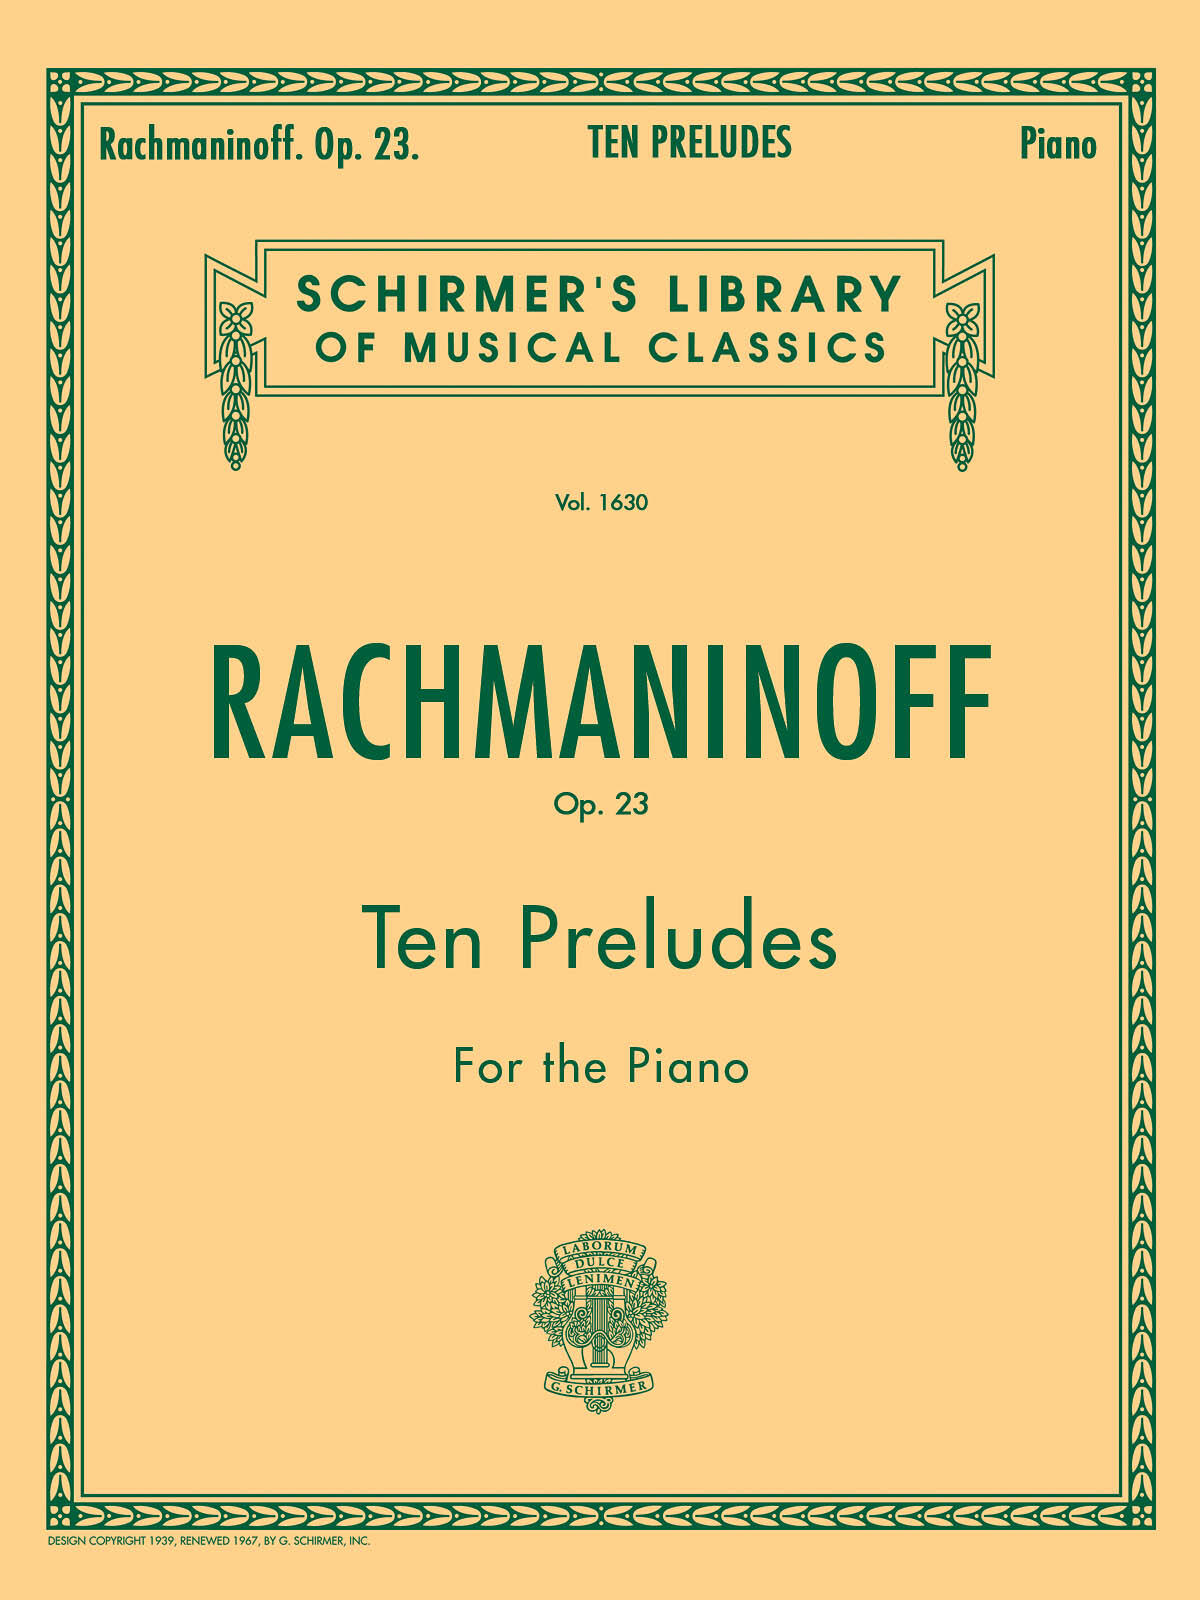 Ten Preludes For Piano Op.23 G. Schirmers Library of Musical Classics Sergei Rachmaninov  Klavier Buch Klassik GS26061 : photo 1